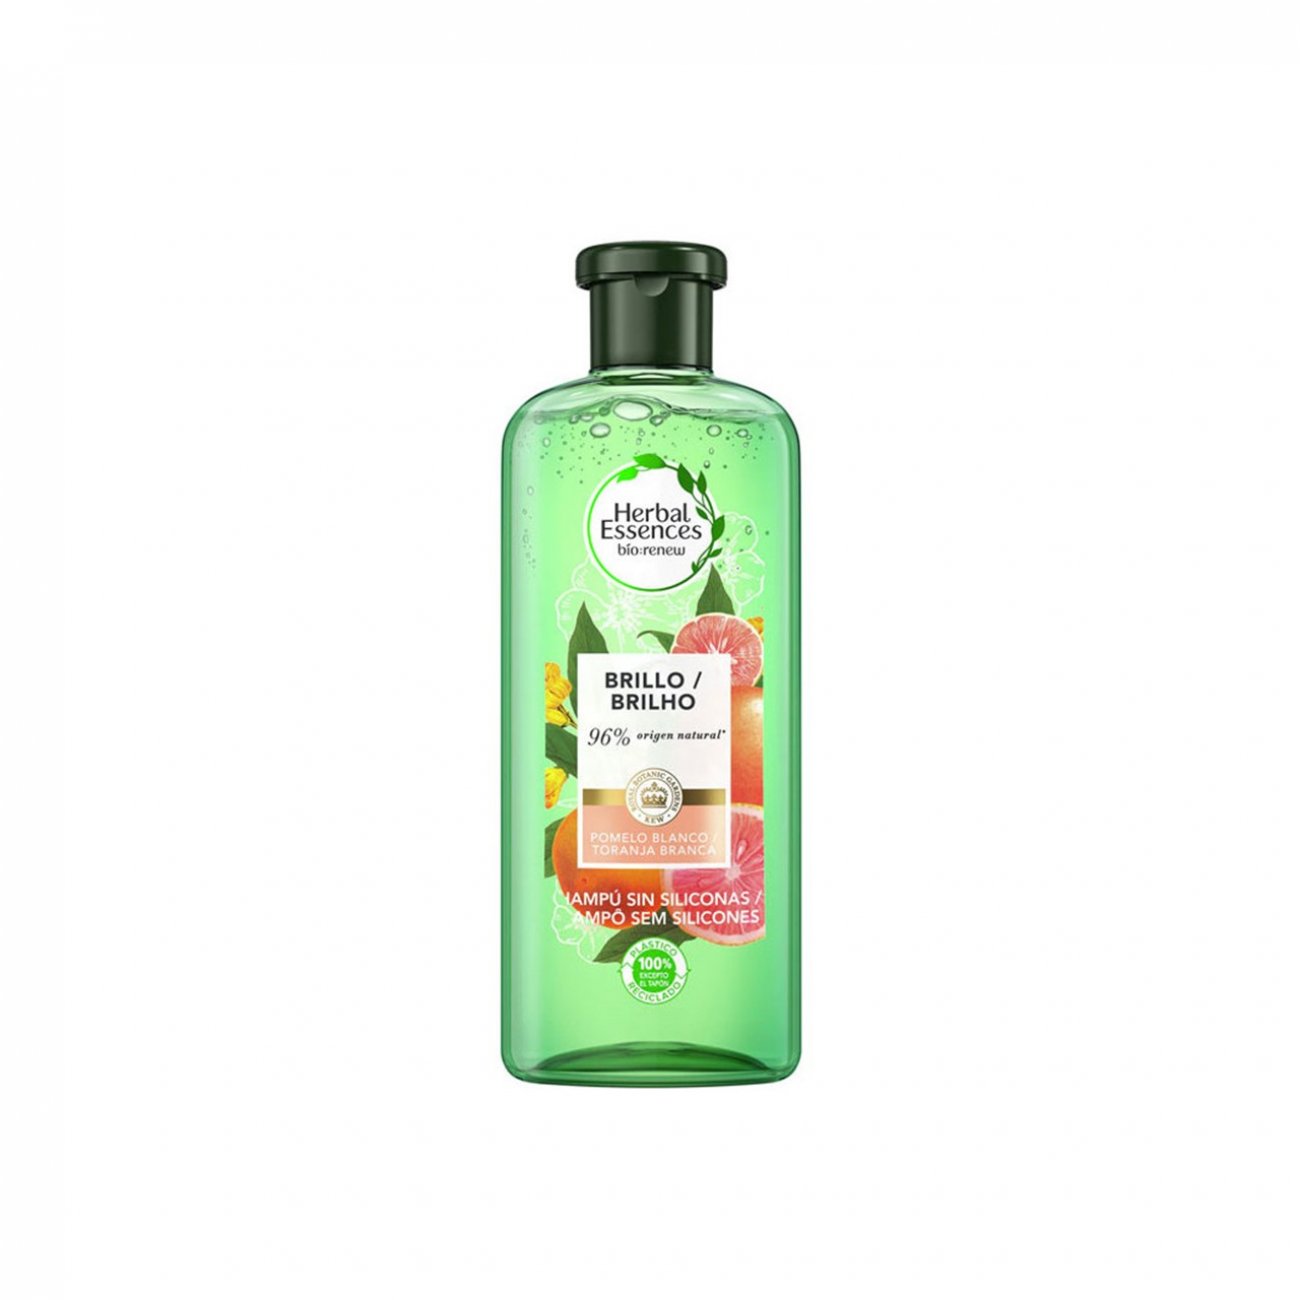 Buy Herbal Essences Bio Renew Shine Grapefruit Shampoo (8.45fl oz) USA